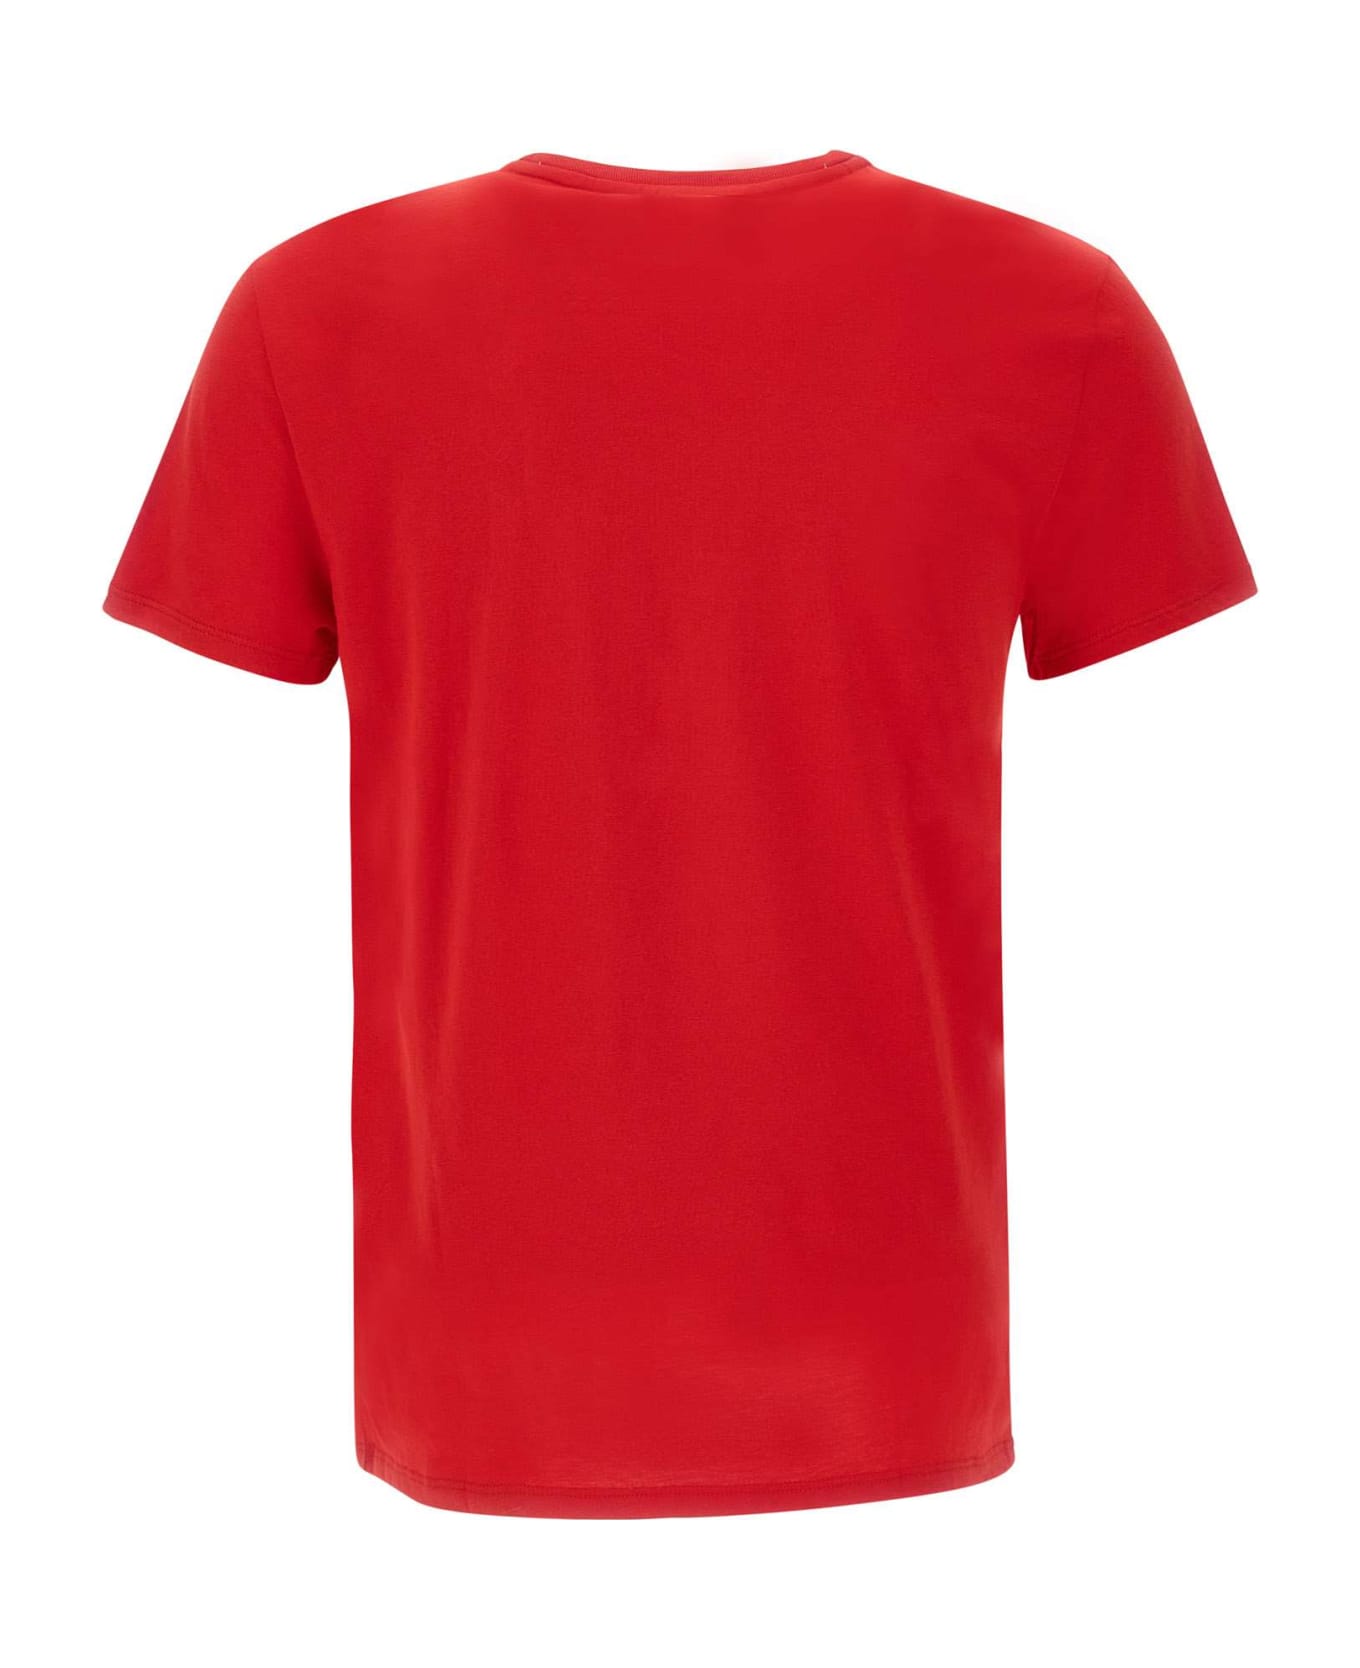 Lacoste Pima Cotton T-shirt - Red